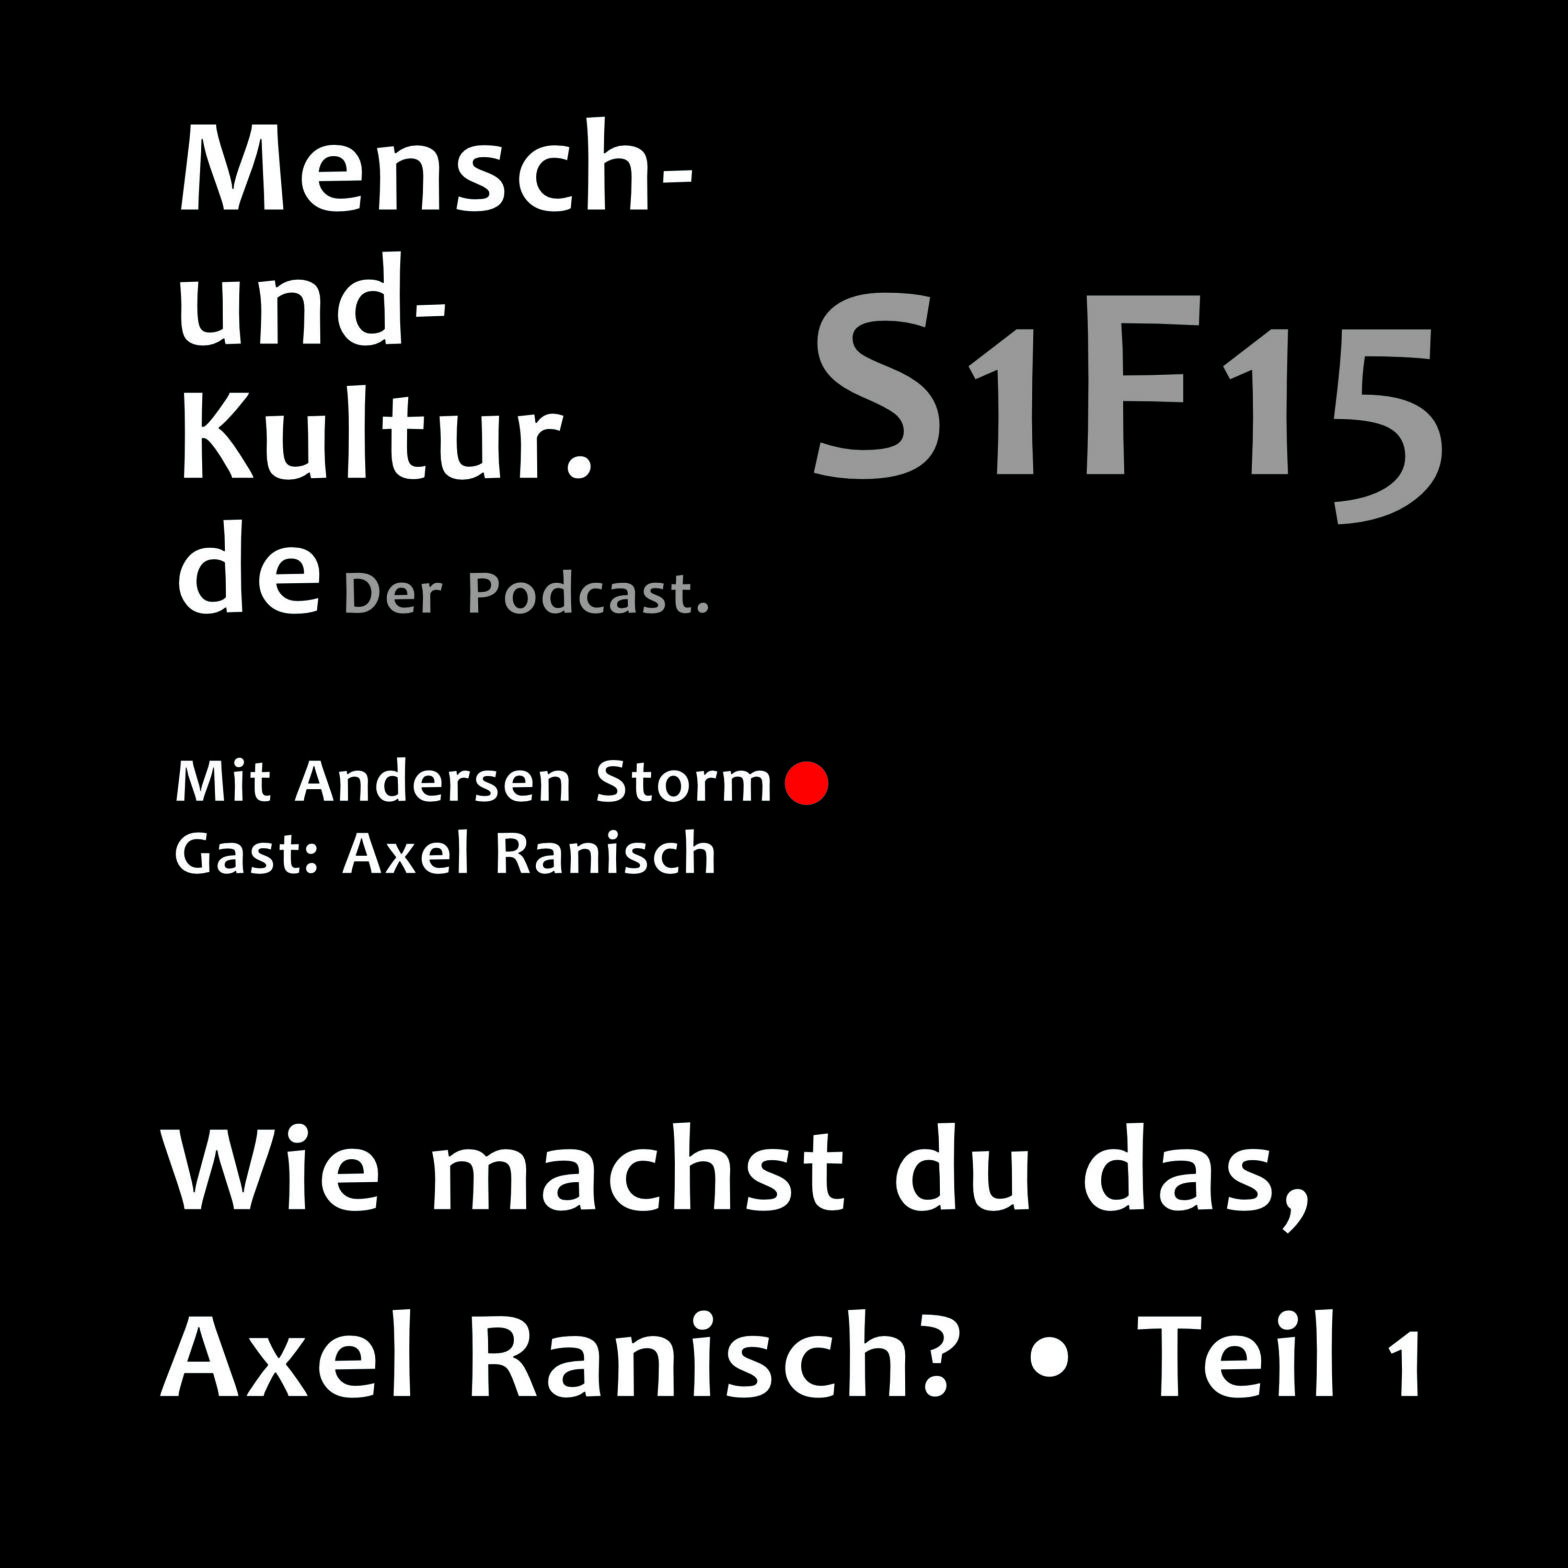 Podcastepisode S1F15, Mensch-und-Kultur.de - der Podcast